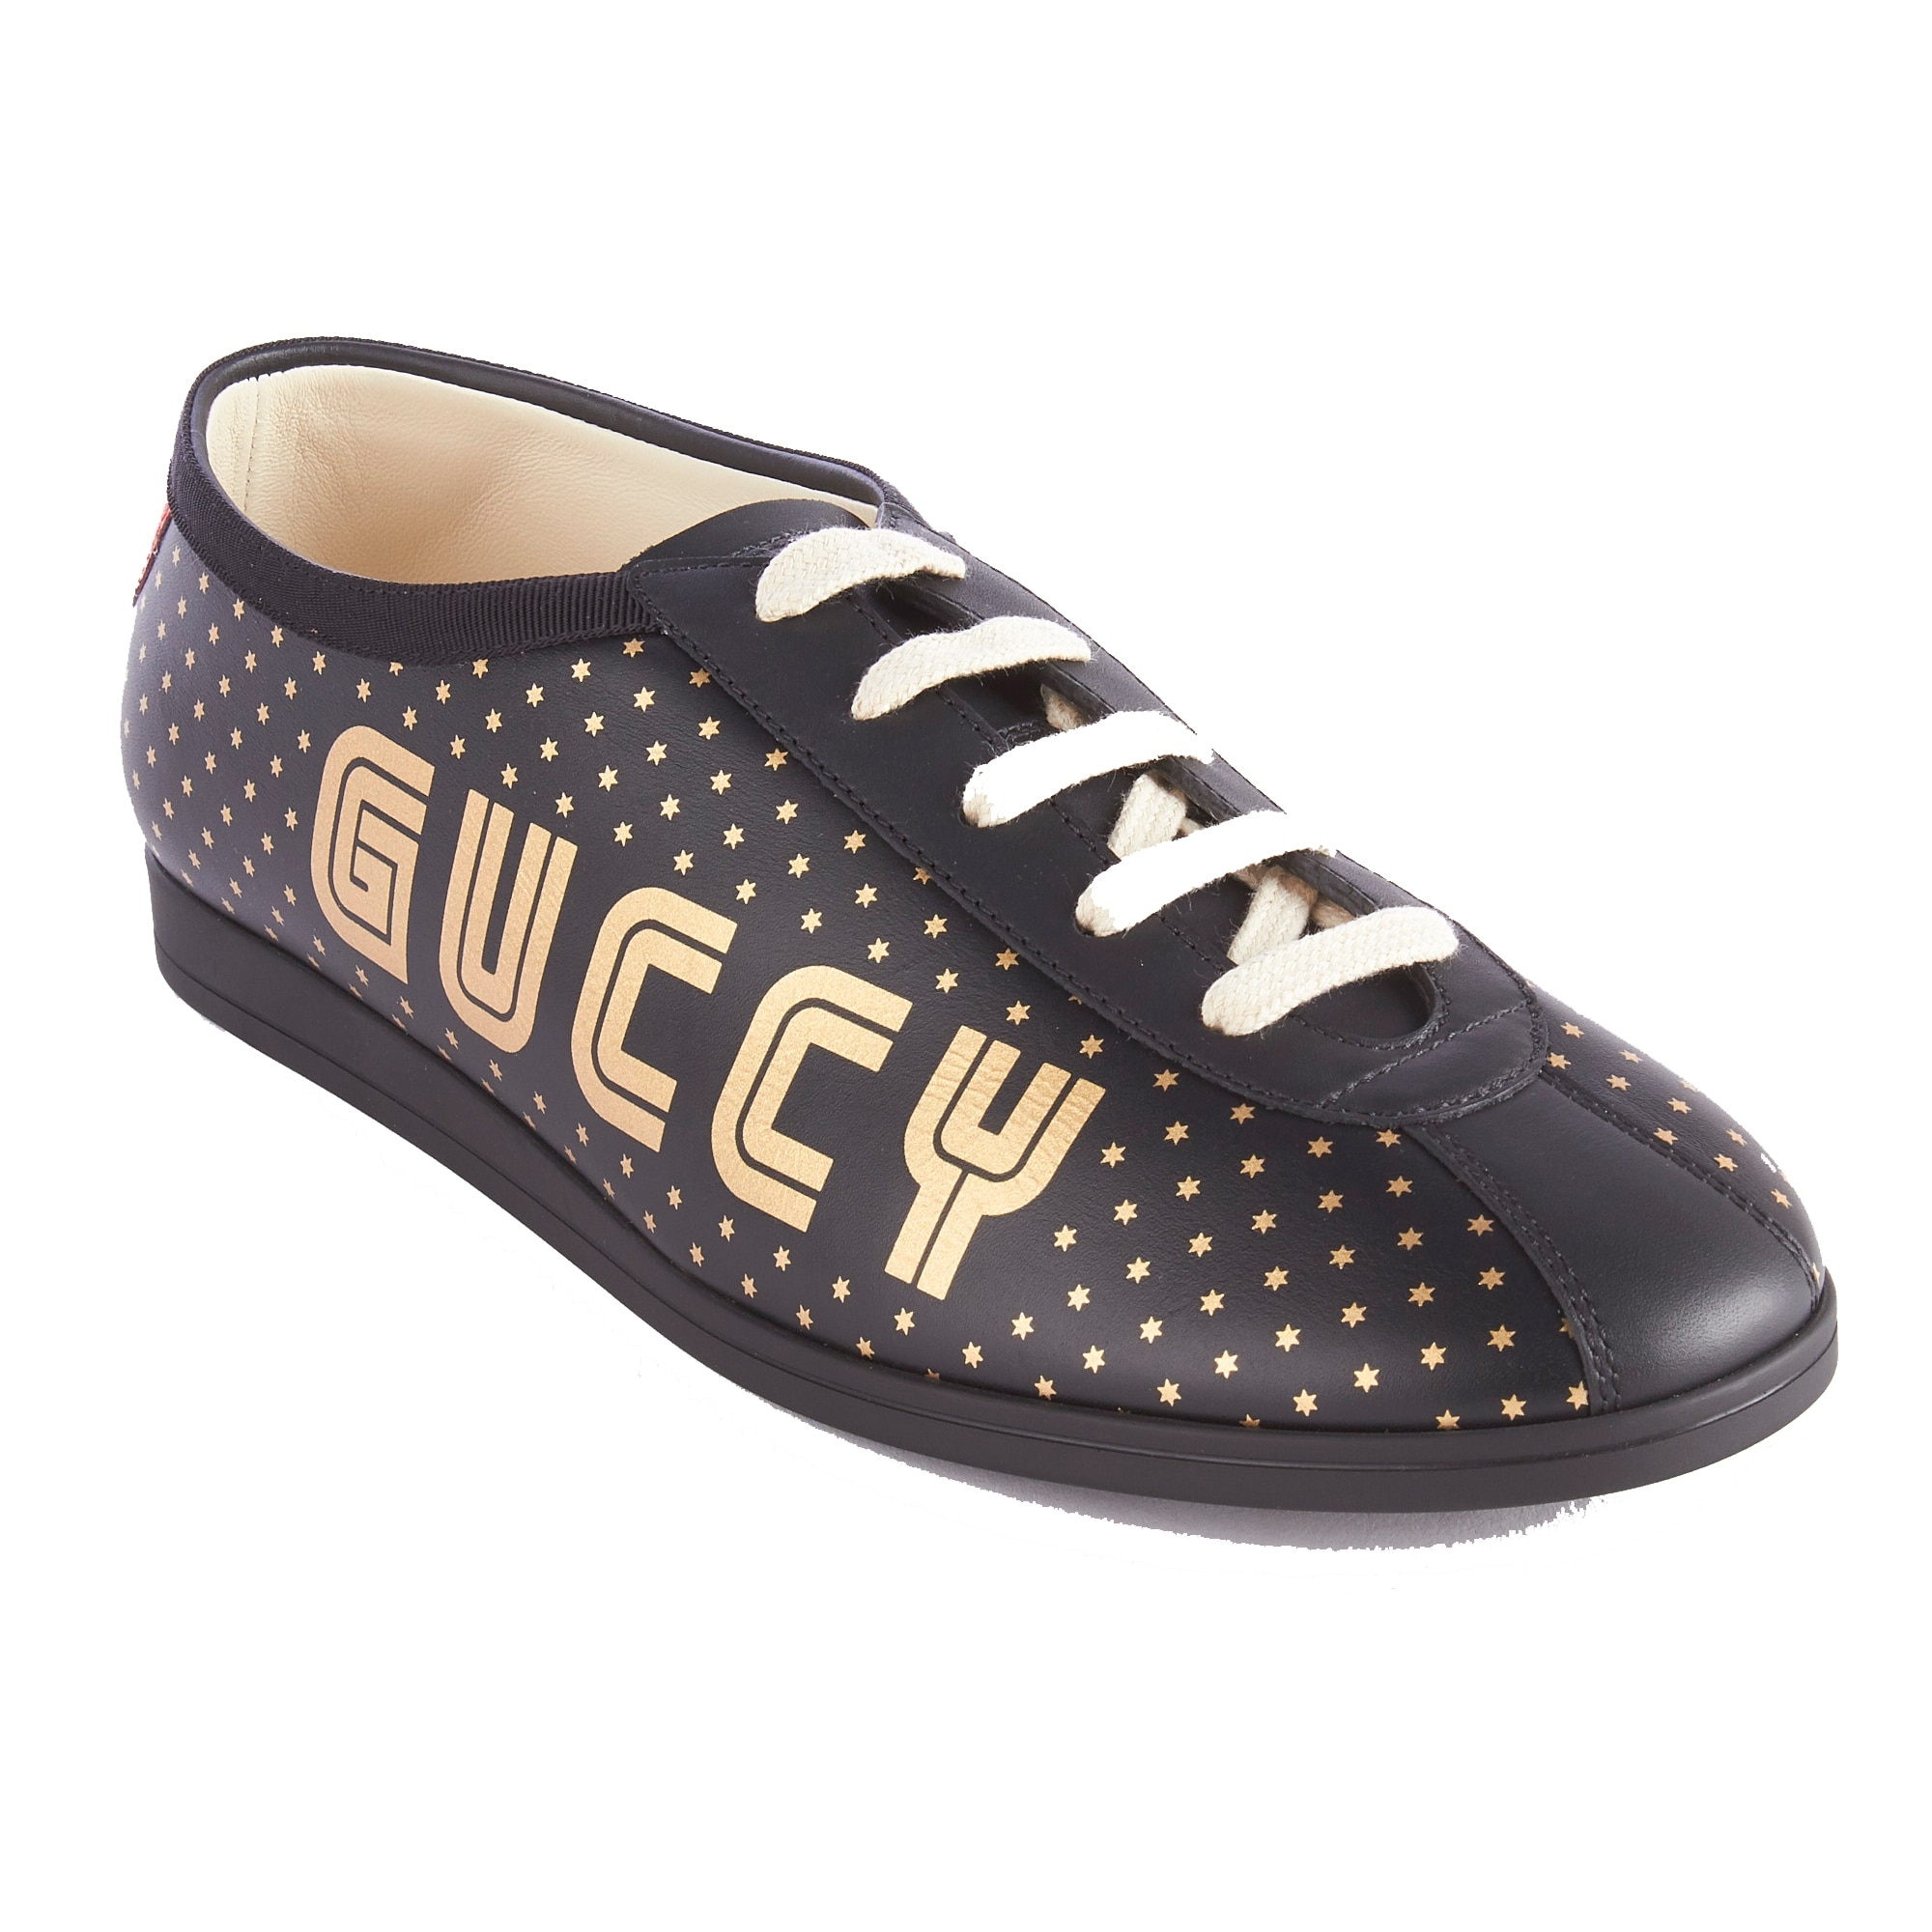 Gucci Men's Guccy Falacer Sneaker Black 